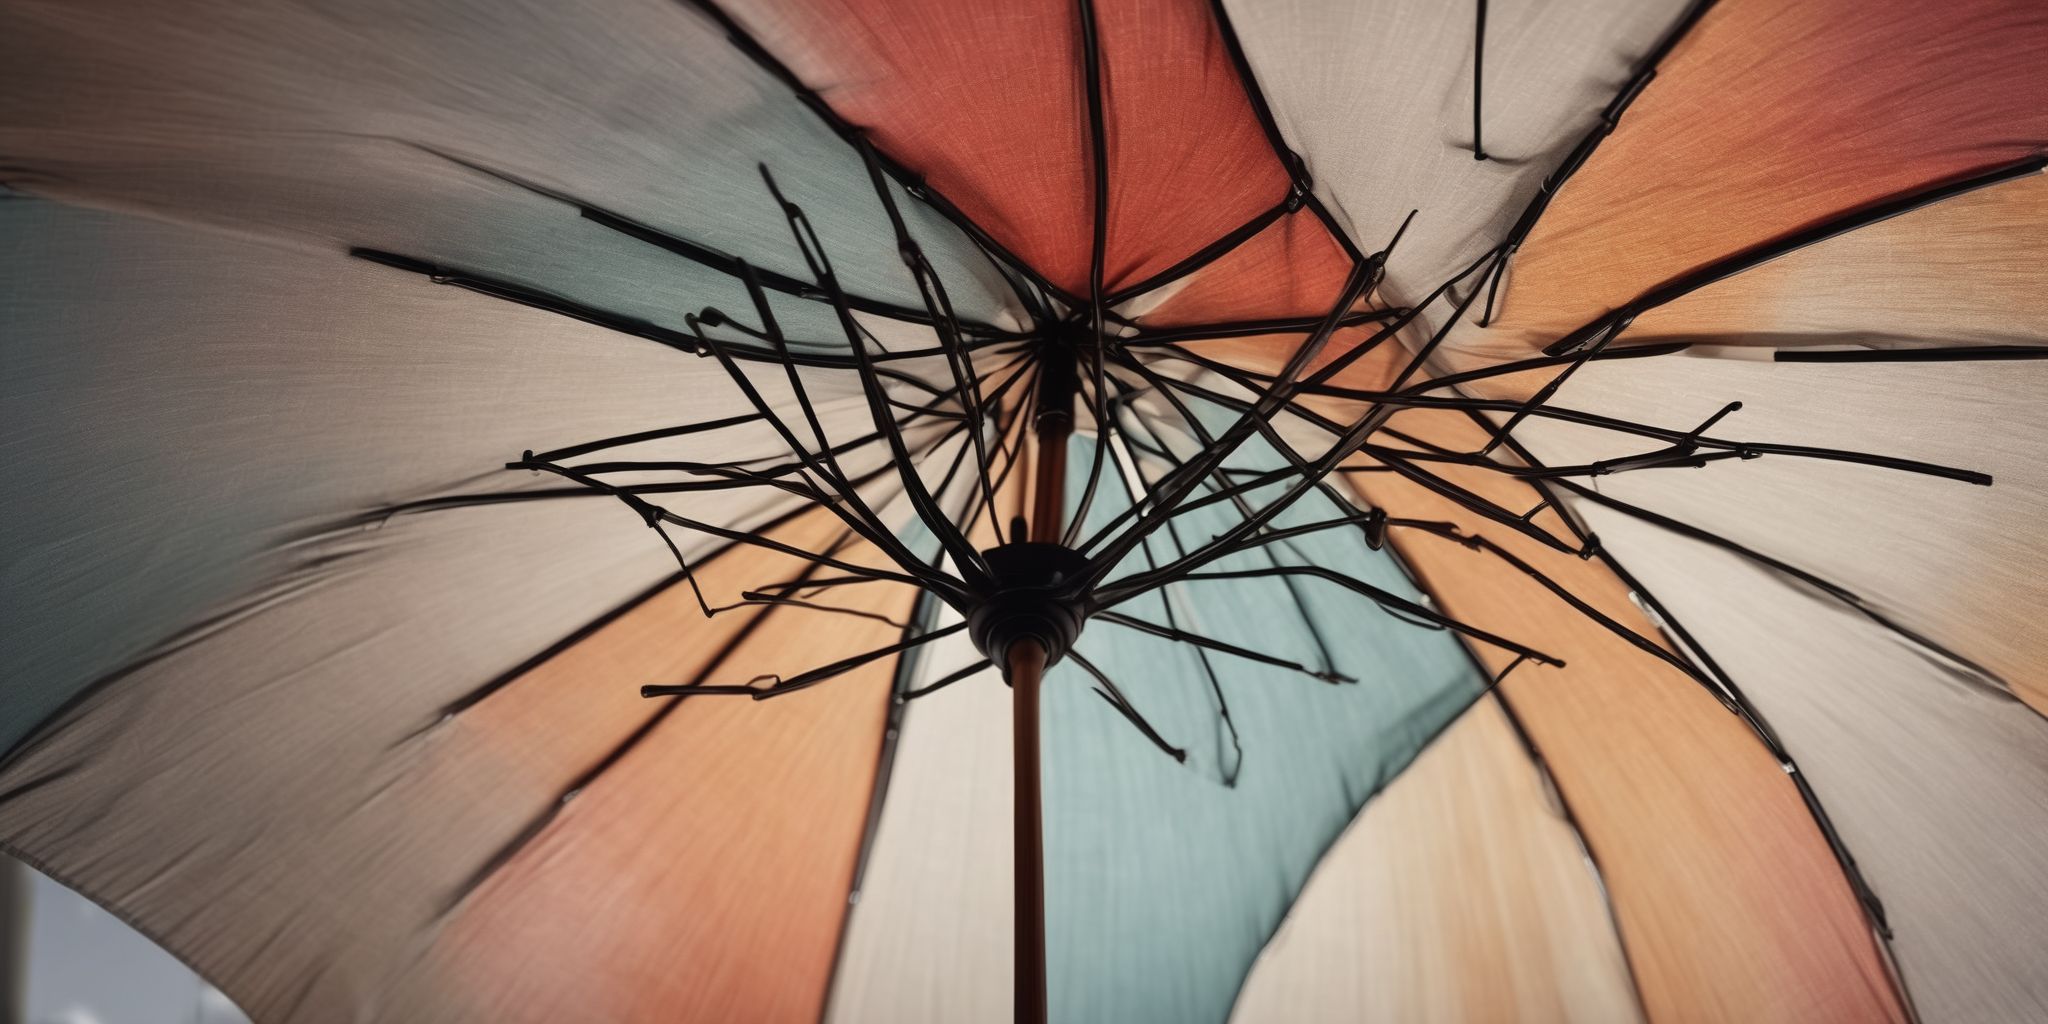 Umbrella  in realistic, photographic style